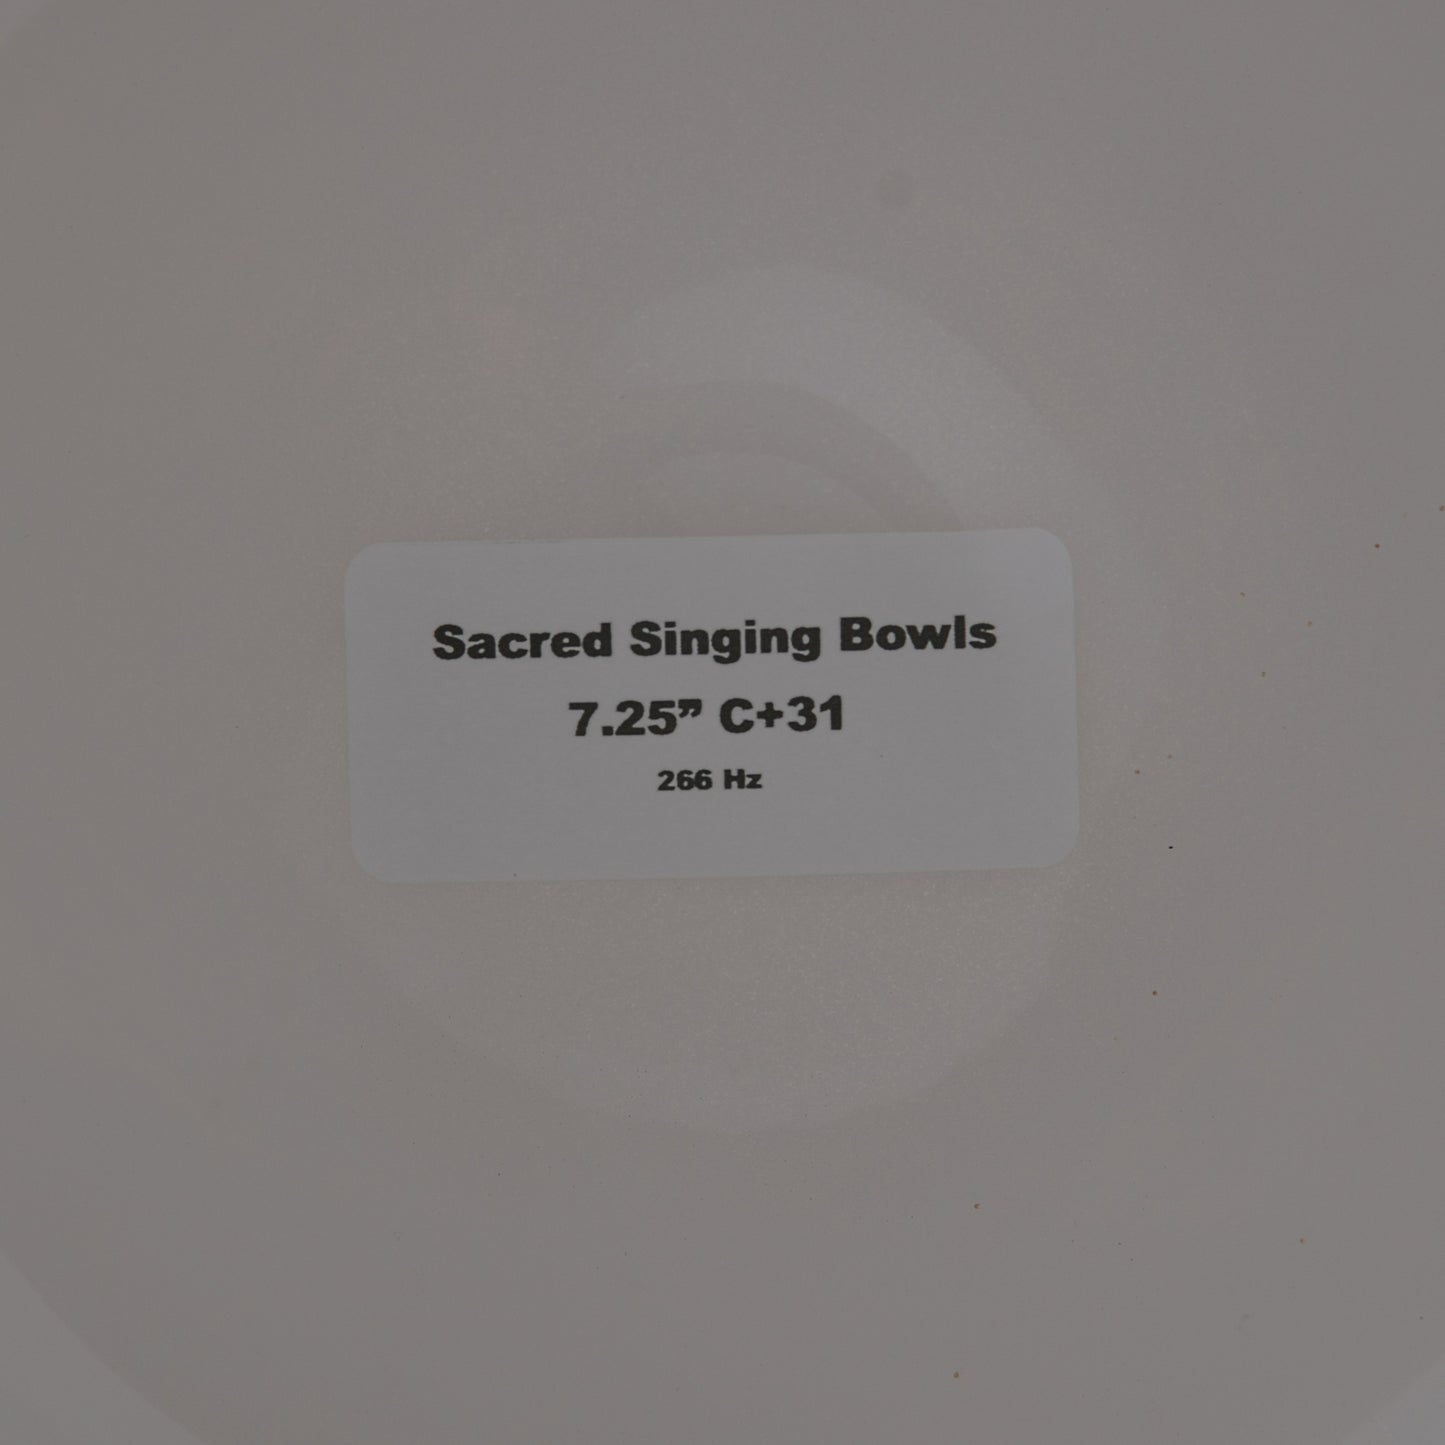 7.25" C+31 White Light Quartz Crystal Singing Bowl, Sacred Singing Bowls